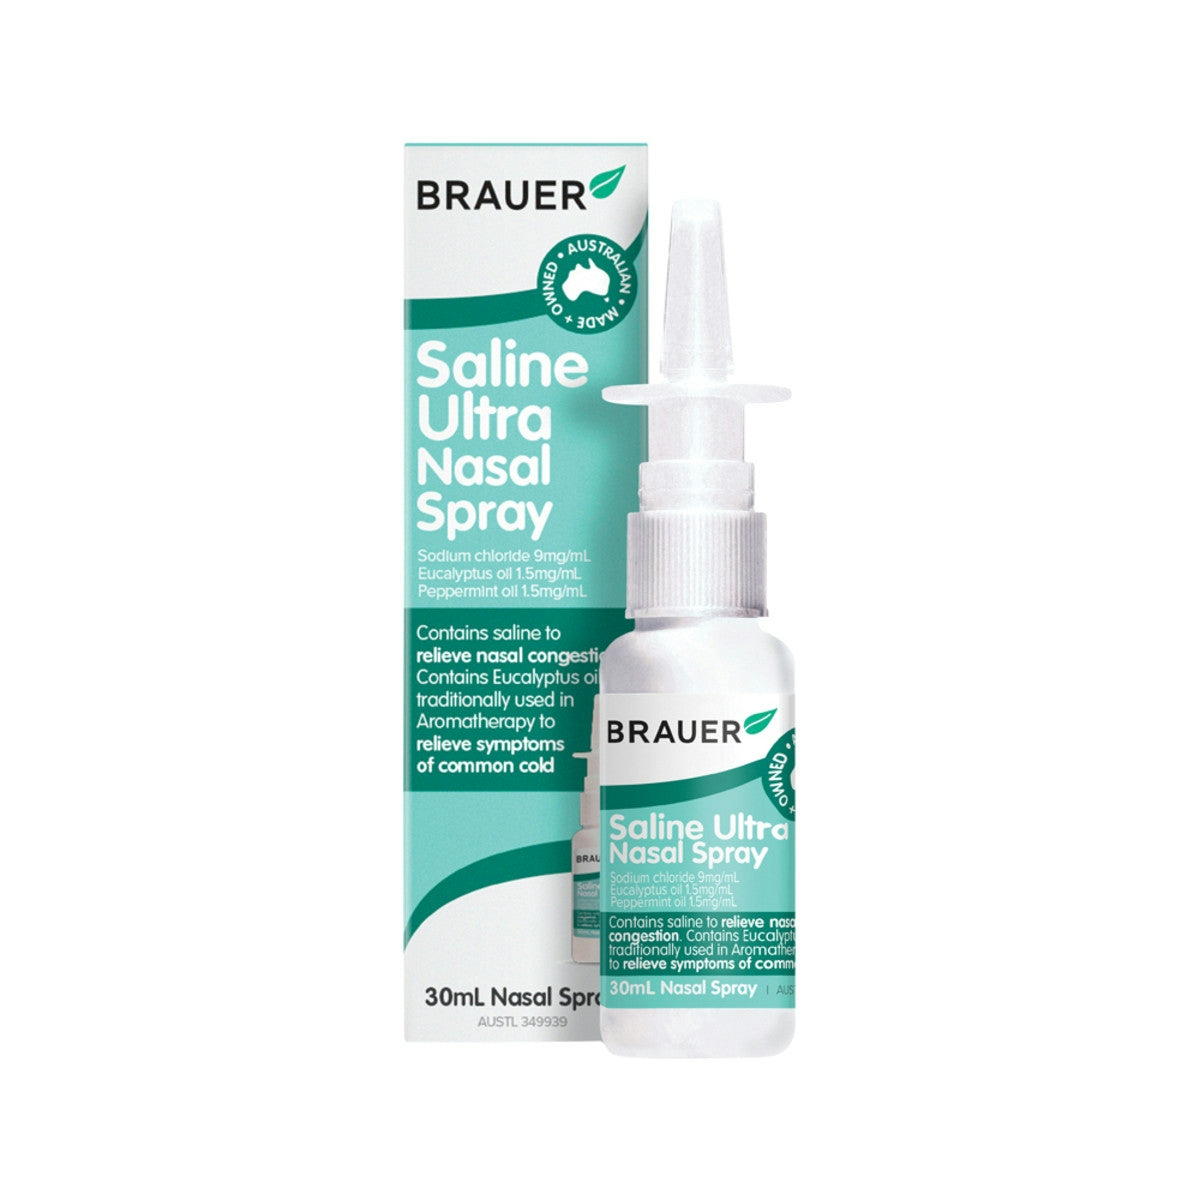 image of Brauer Saline Ultra Nasal Spray 30ml on white background